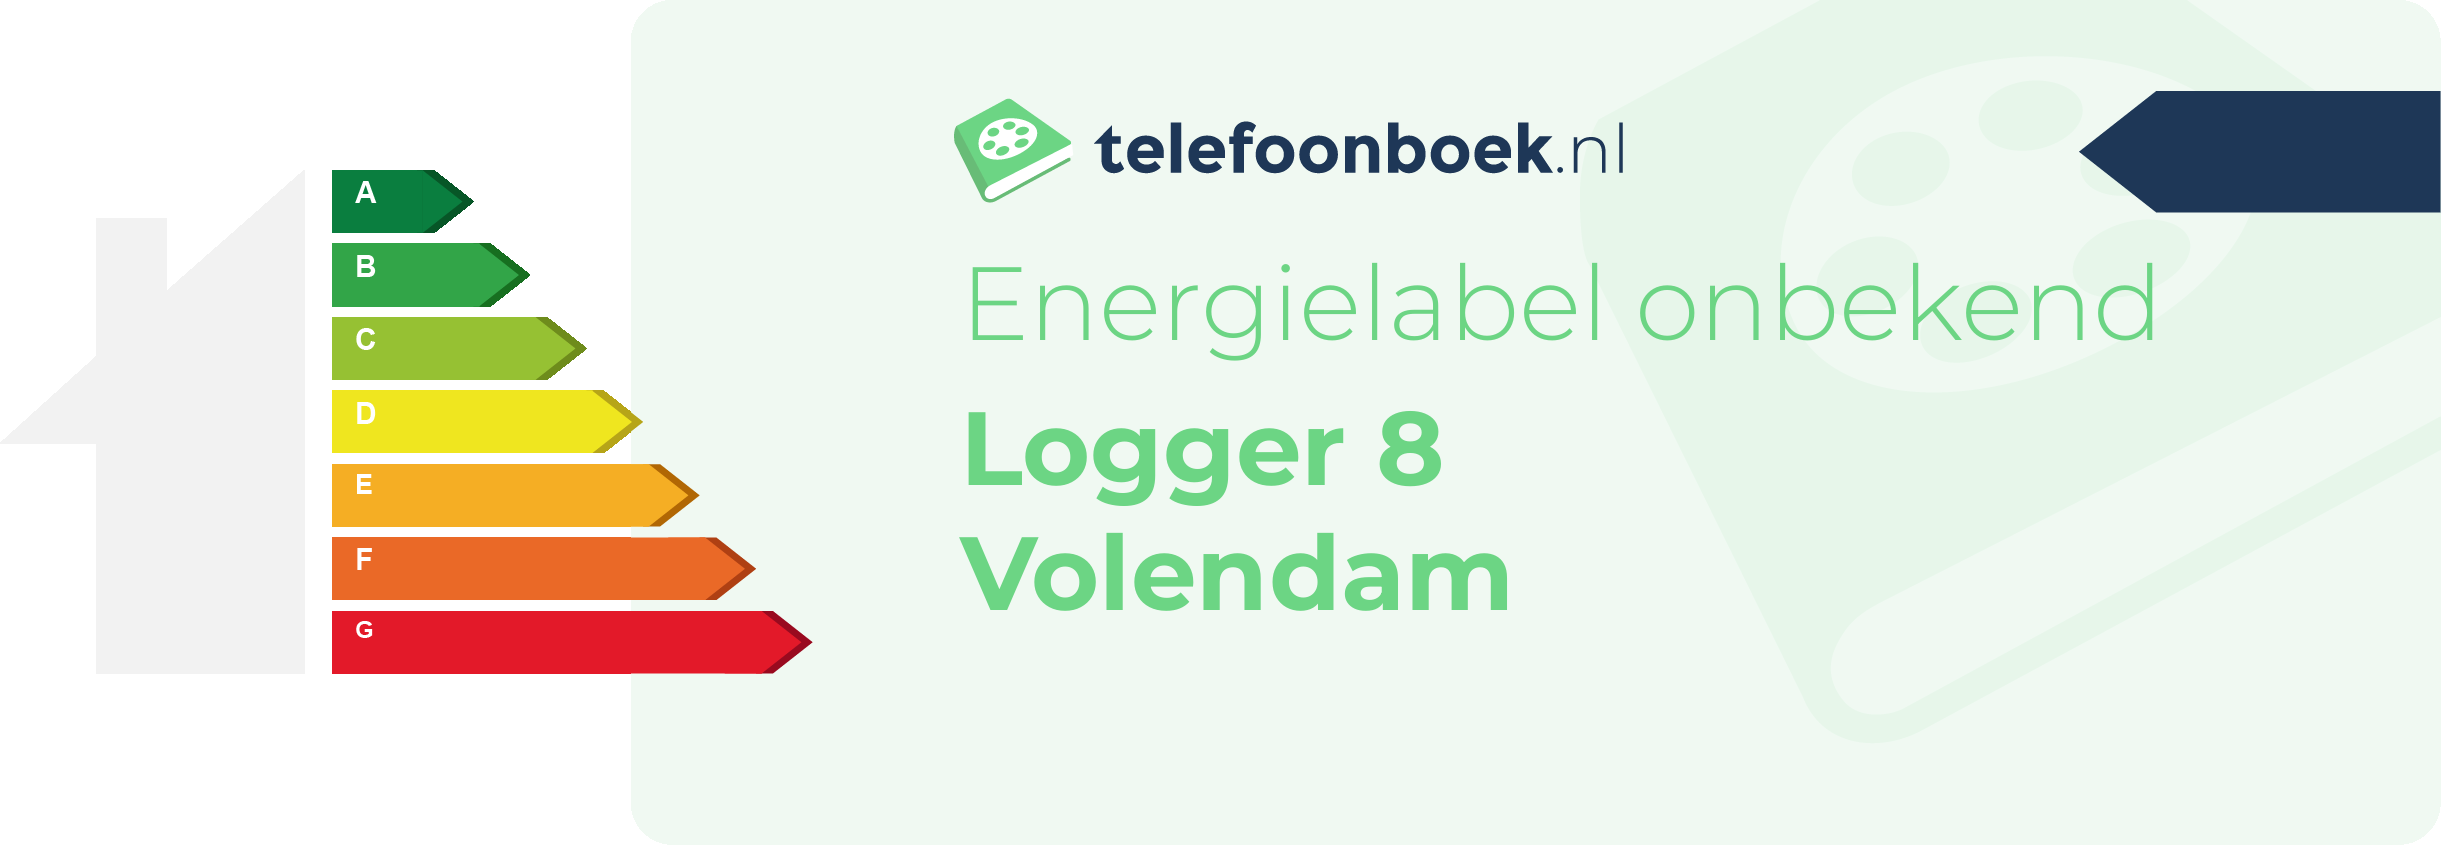 Energielabel Logger 8 Volendam